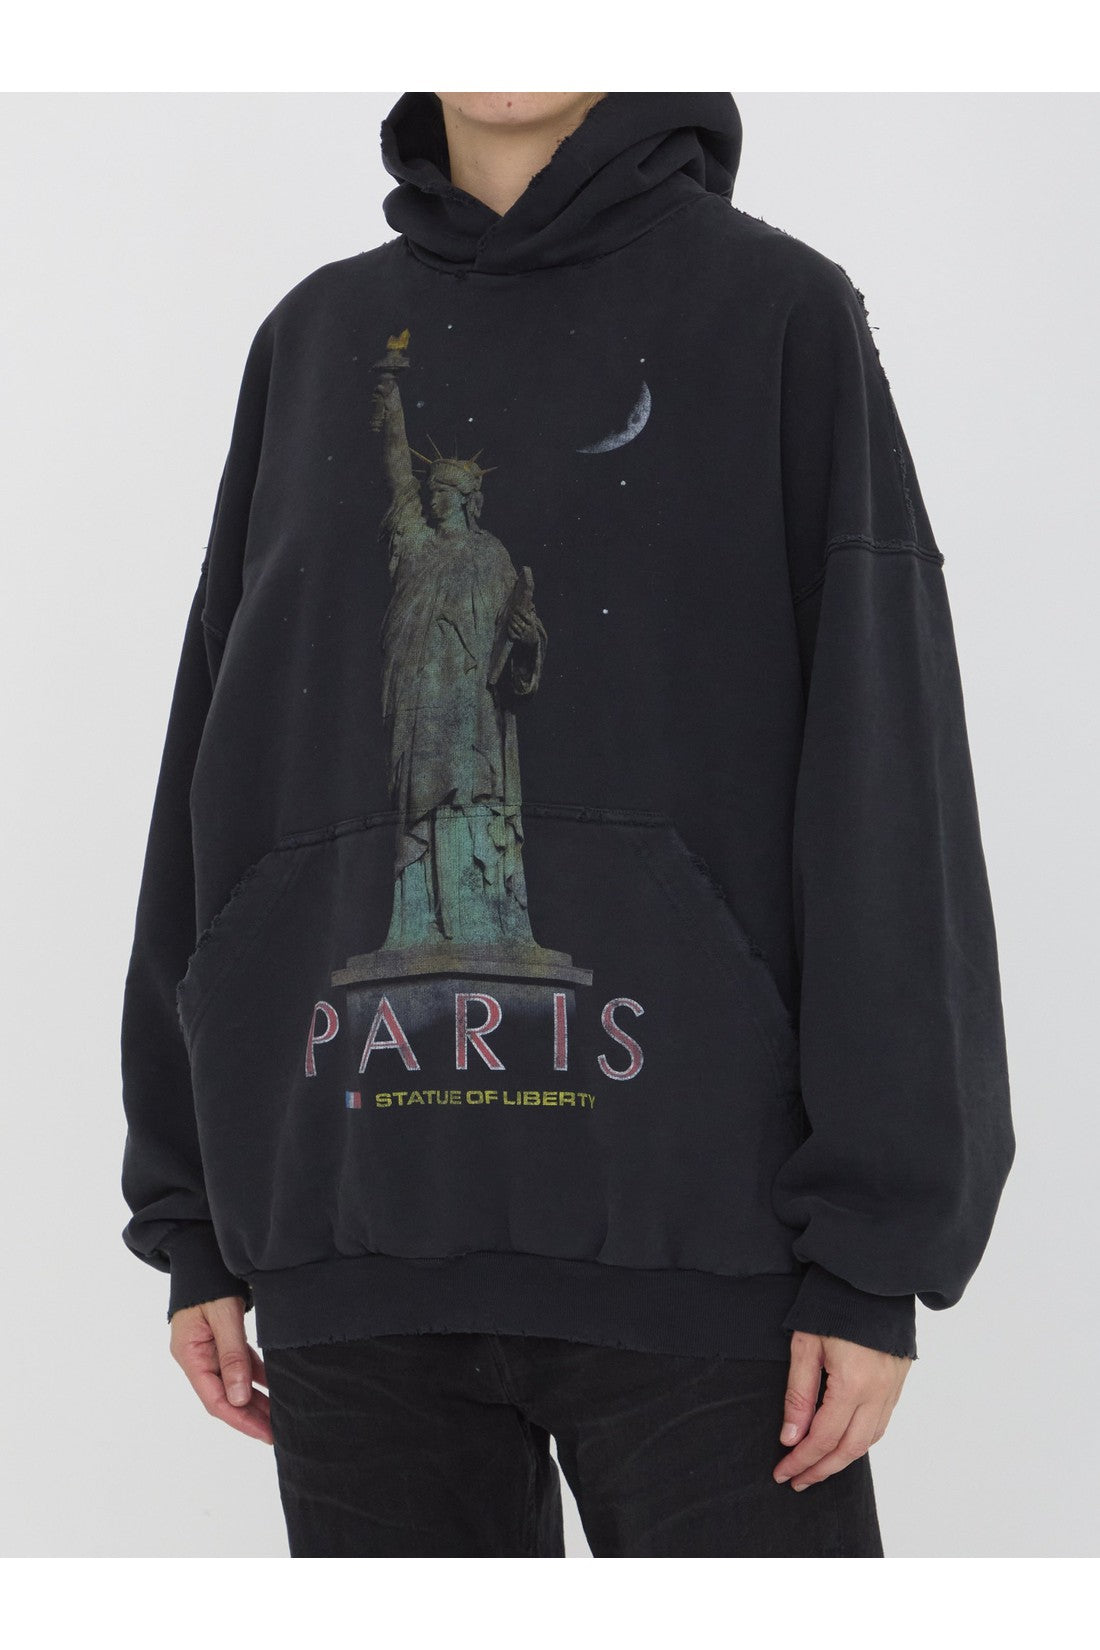 Paris Liberty hoodie